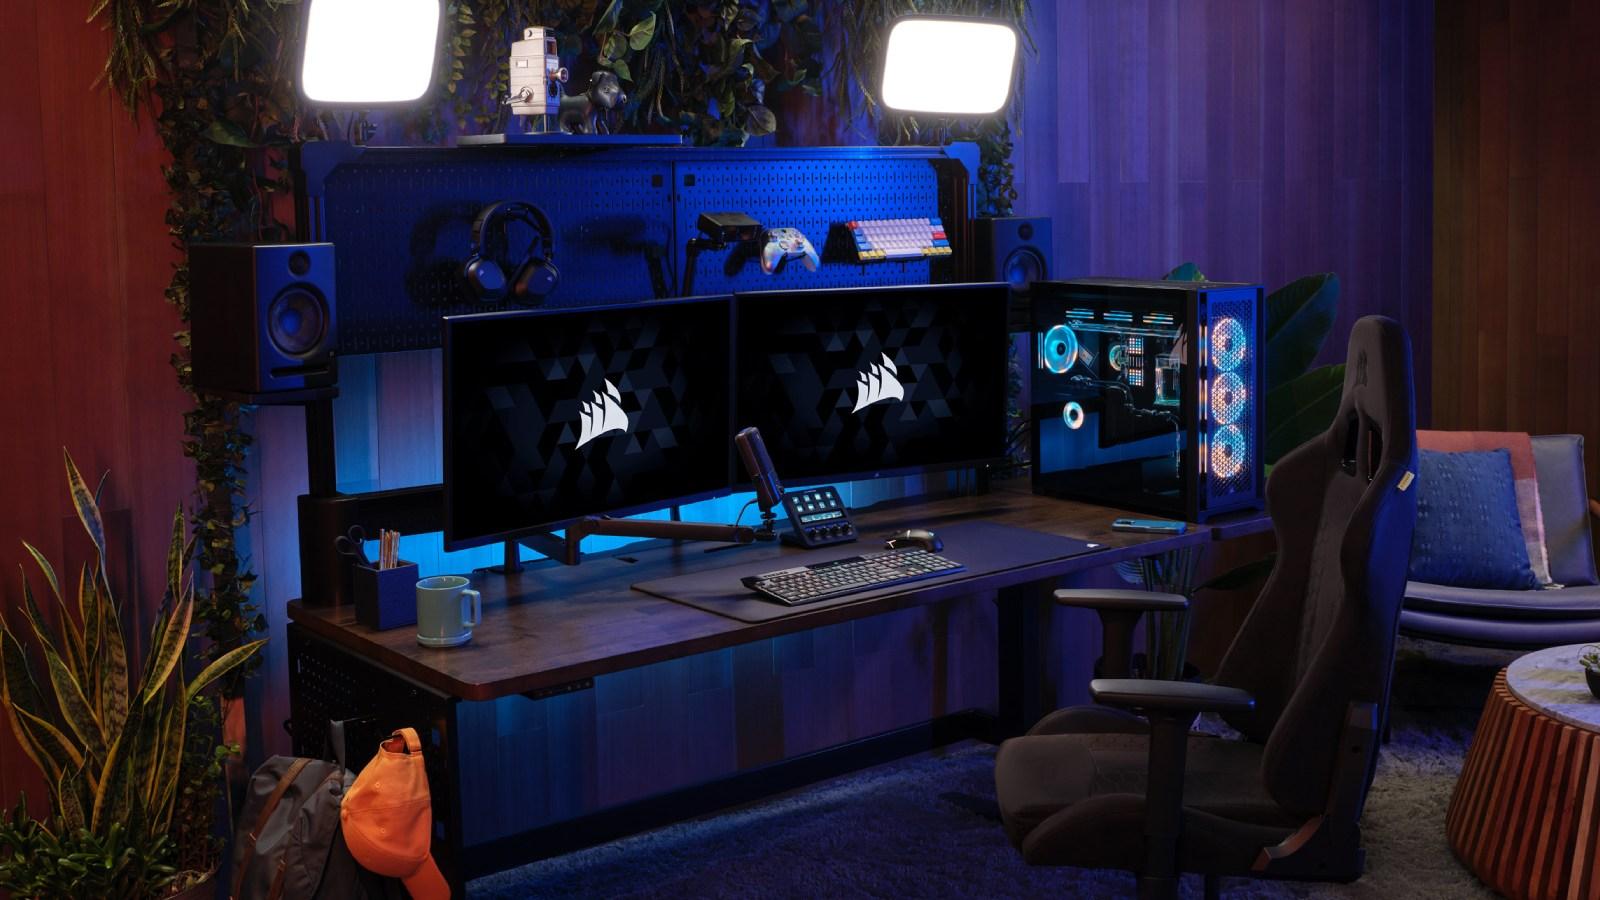 Corsair Gaming Desk with RGB lighting